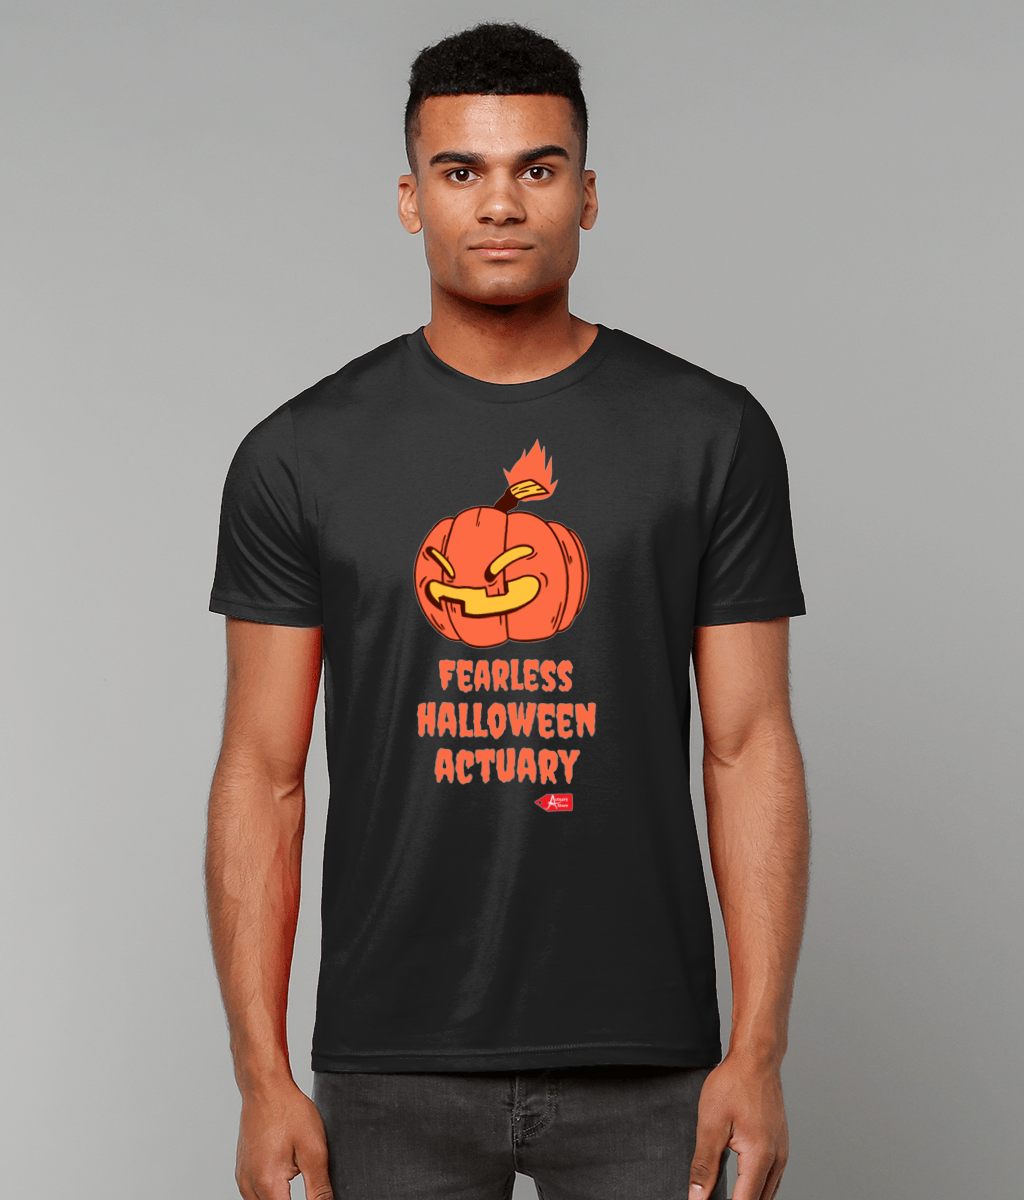 Fearless Halloween Actuary T-Shirt